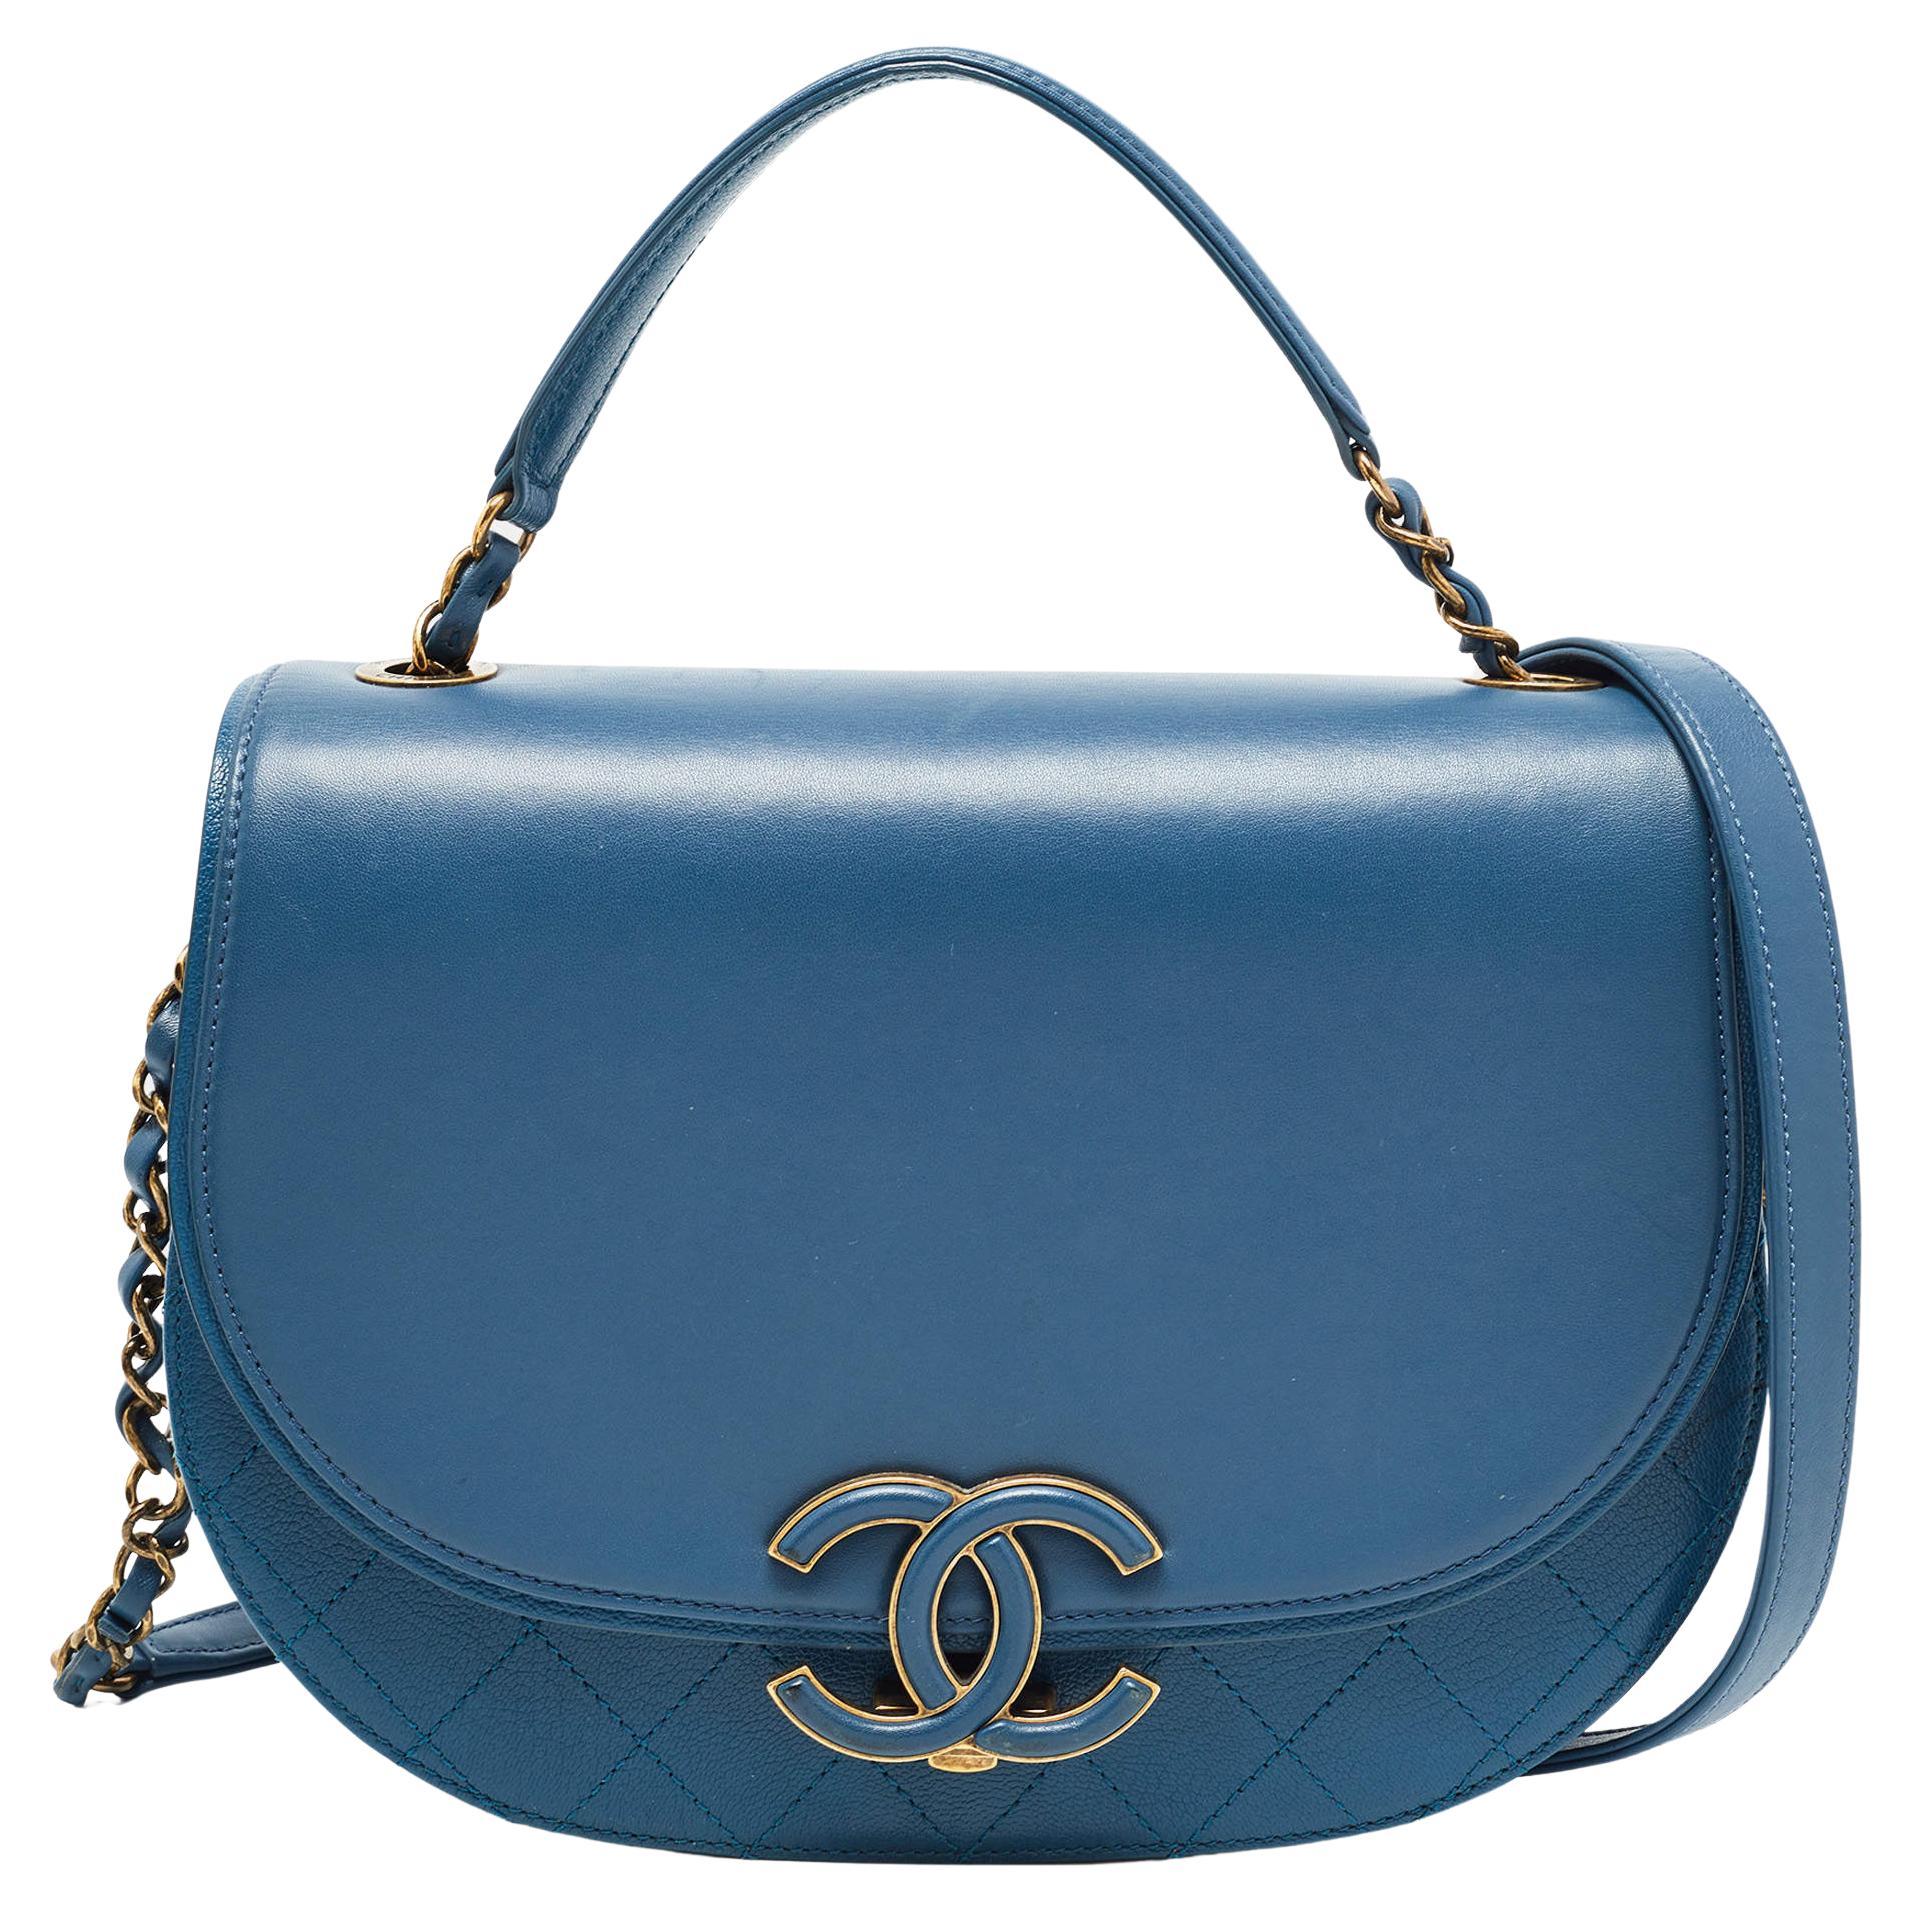 Chanel Blue Quilt Stitched Leather Coco Curve Flap Shoulder Bag at